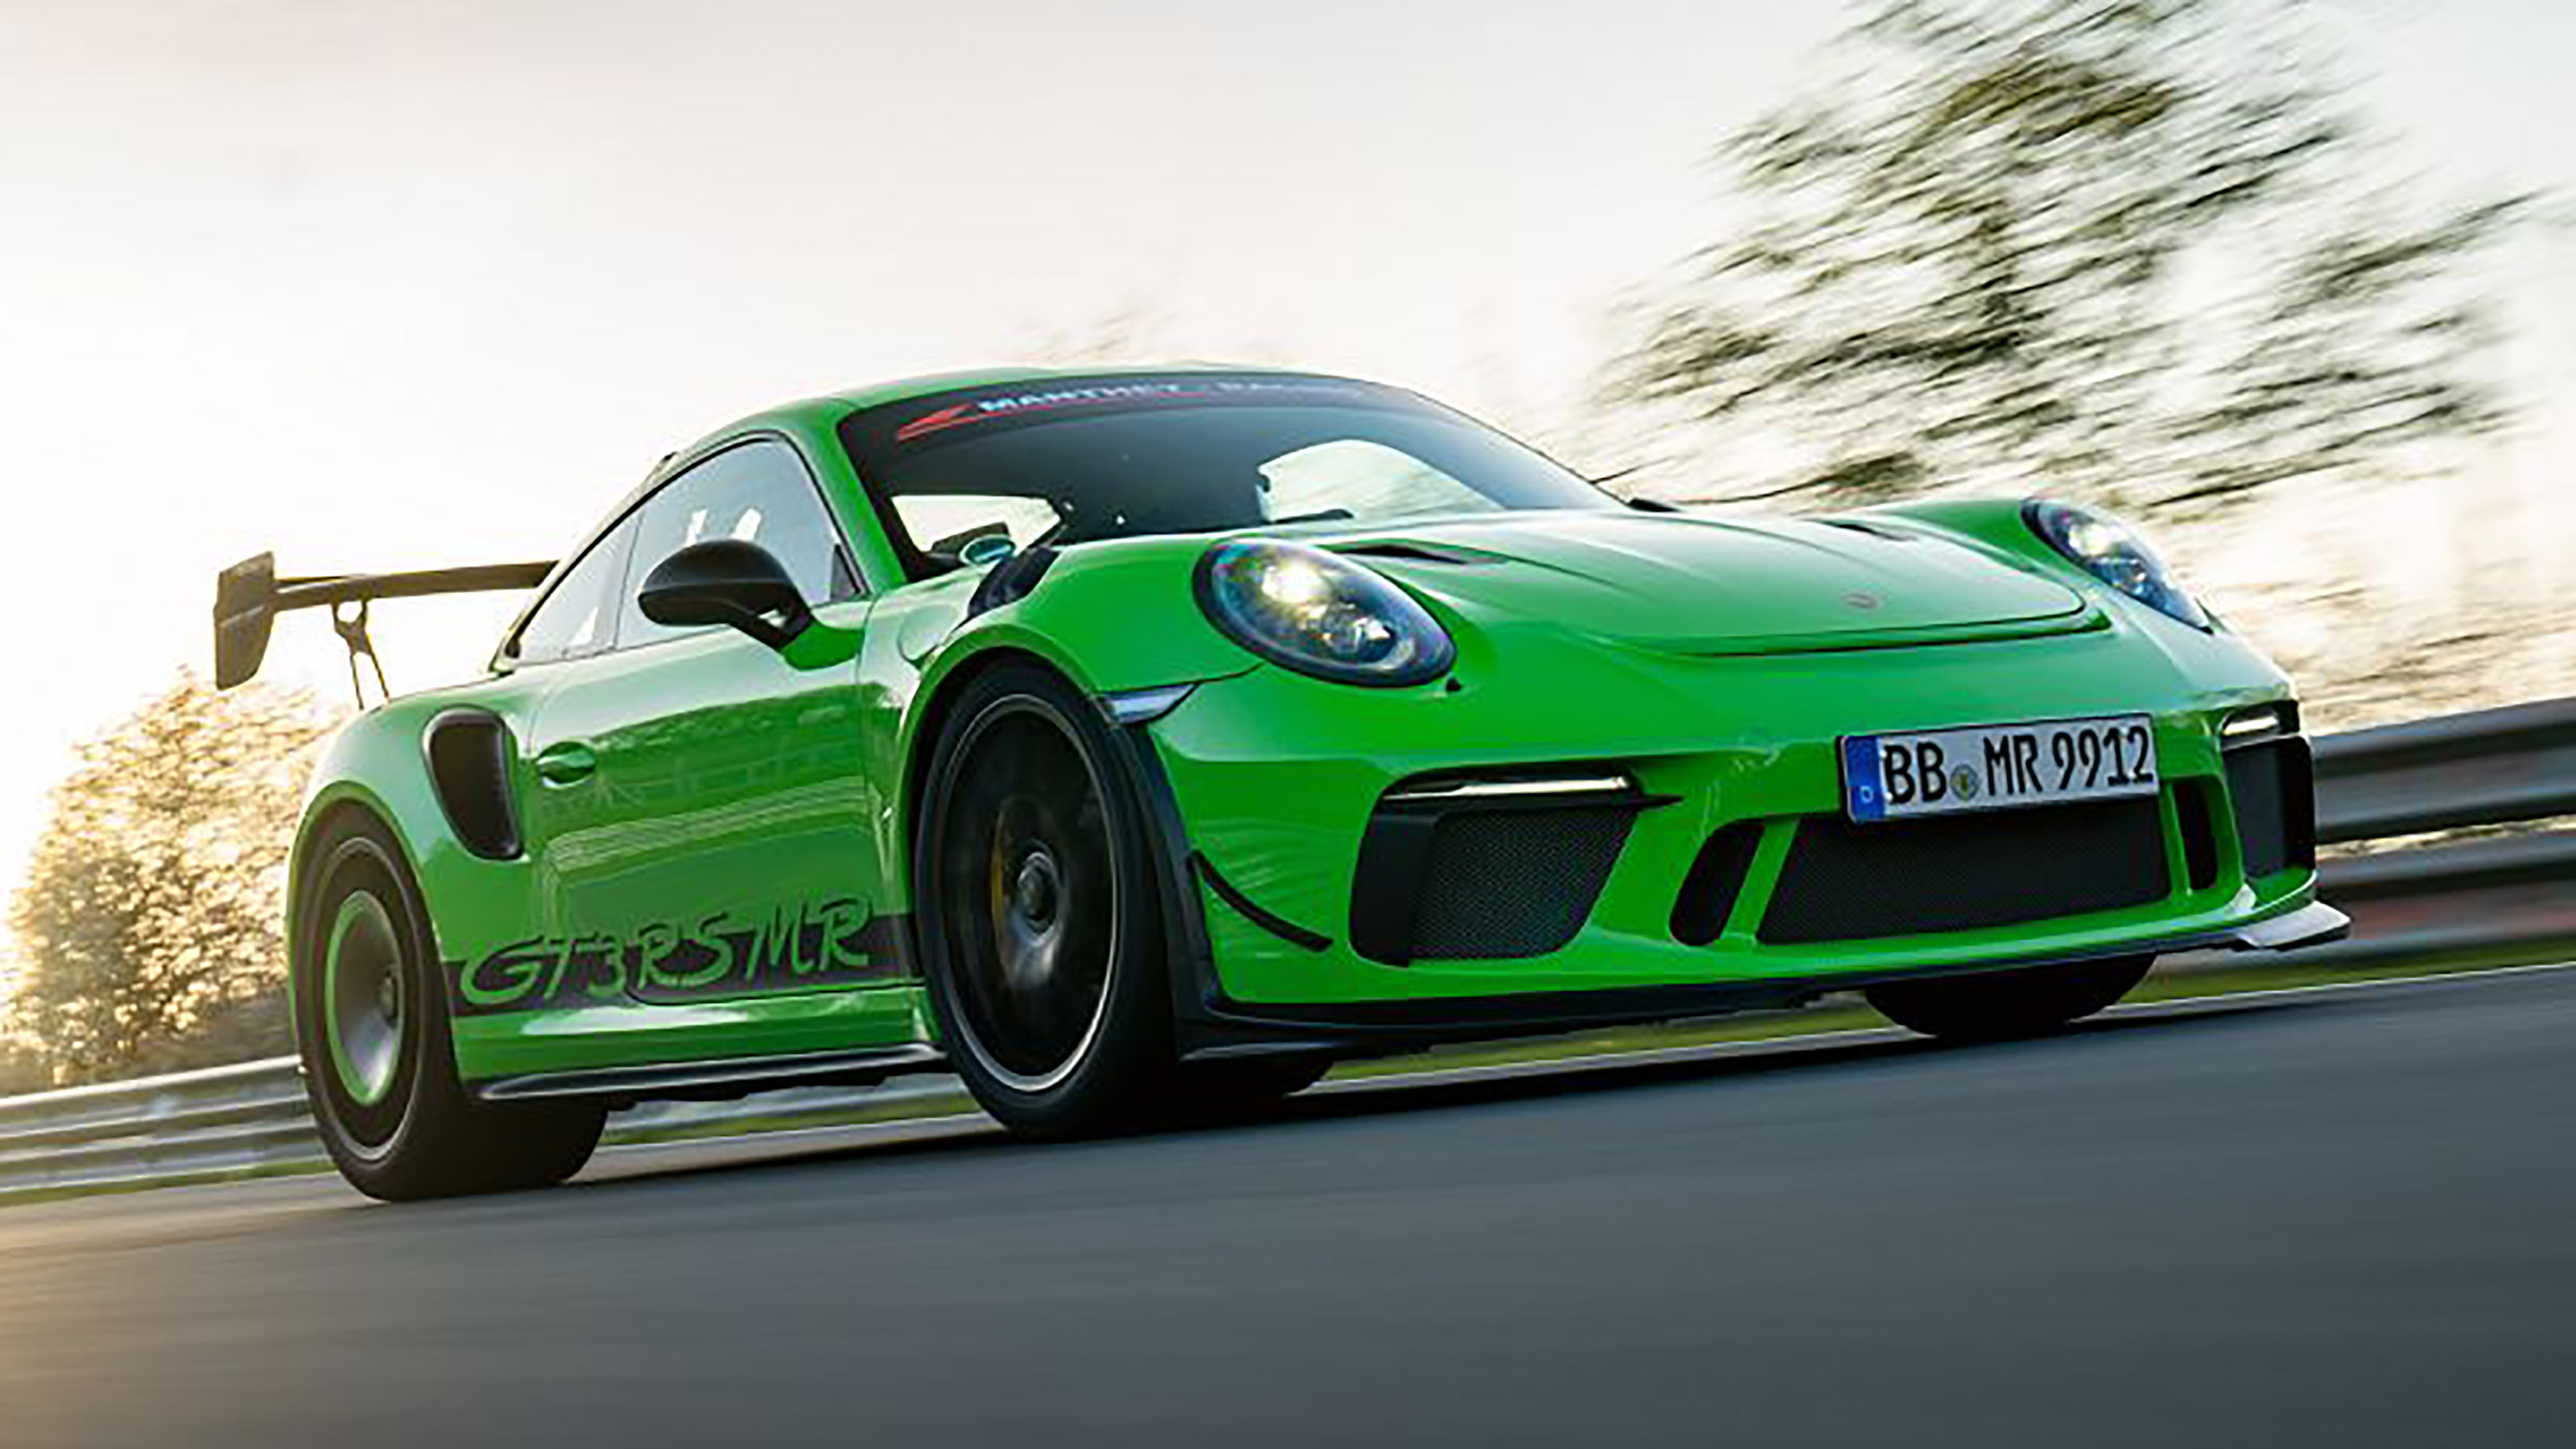 Porsche 911 GT3 RS review